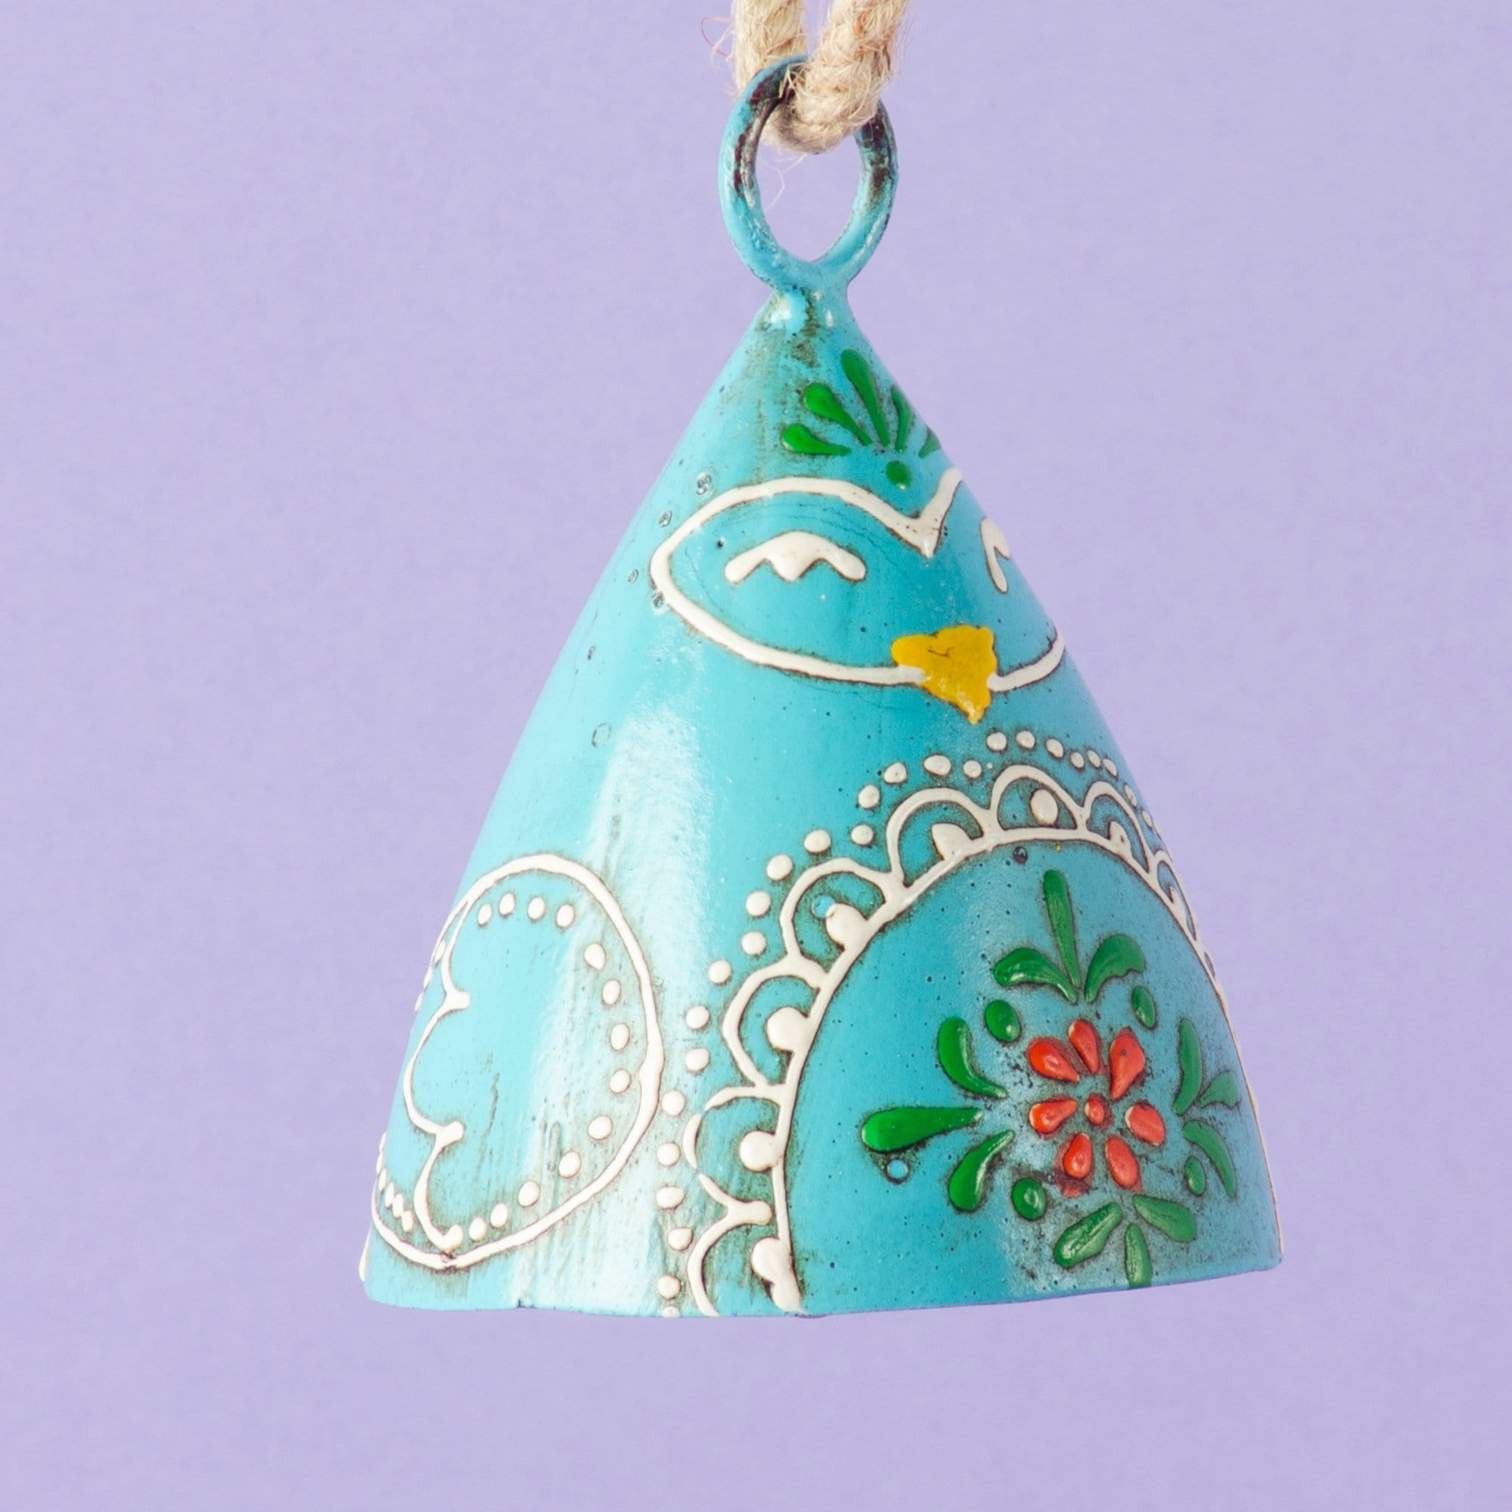 Henna Treasure Bird Bell Chime - Hand Painted Patio Decor